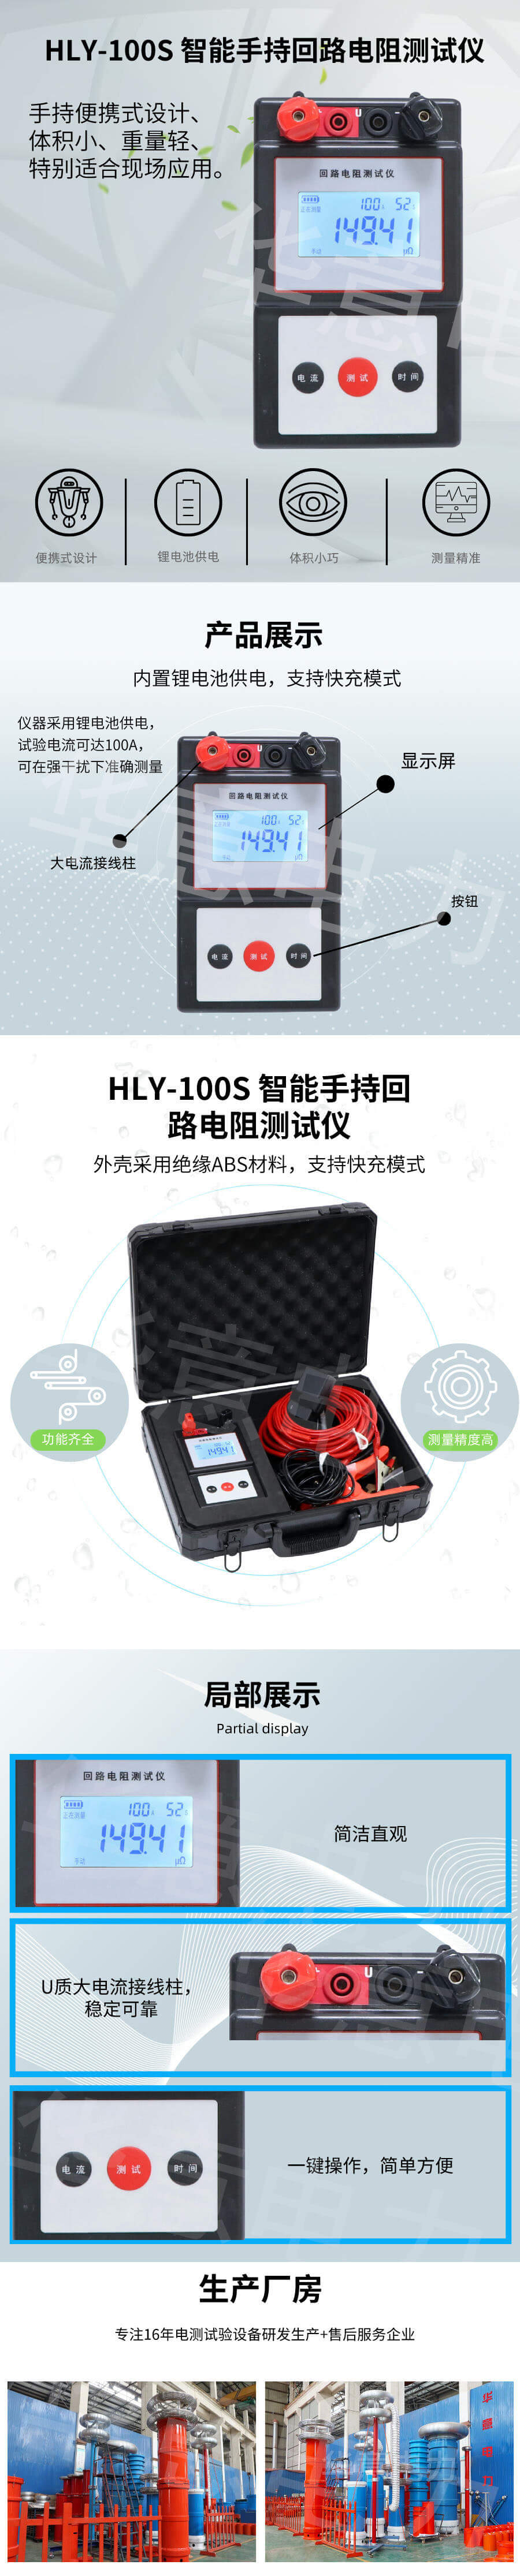 906 HLY-100S 智能手持回路电阻测试仪 _自定义px_2021-08-03-0.jpeg